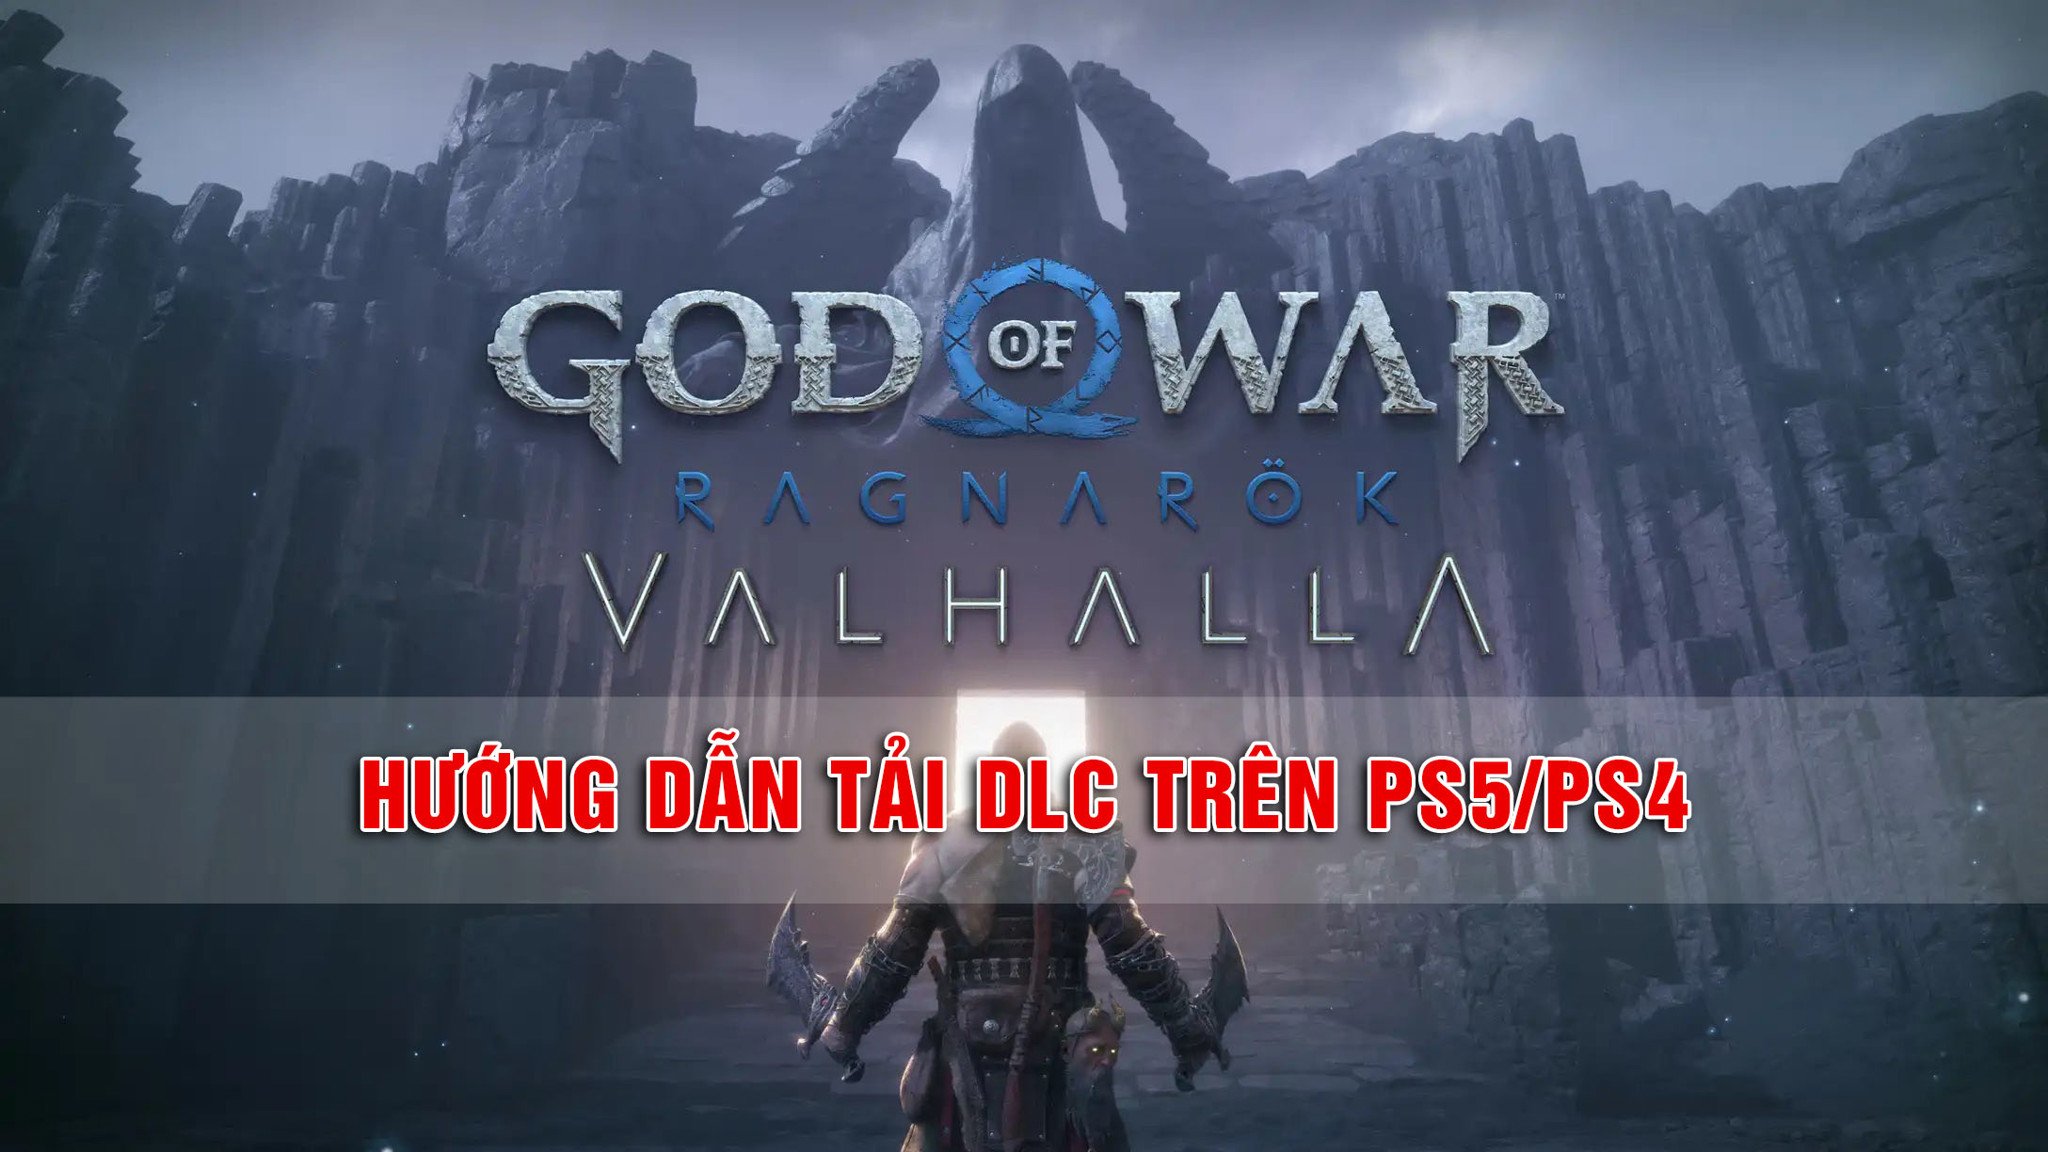 Hướng dẫn cách tải DLC Valhalla của God of War: Ragnarok